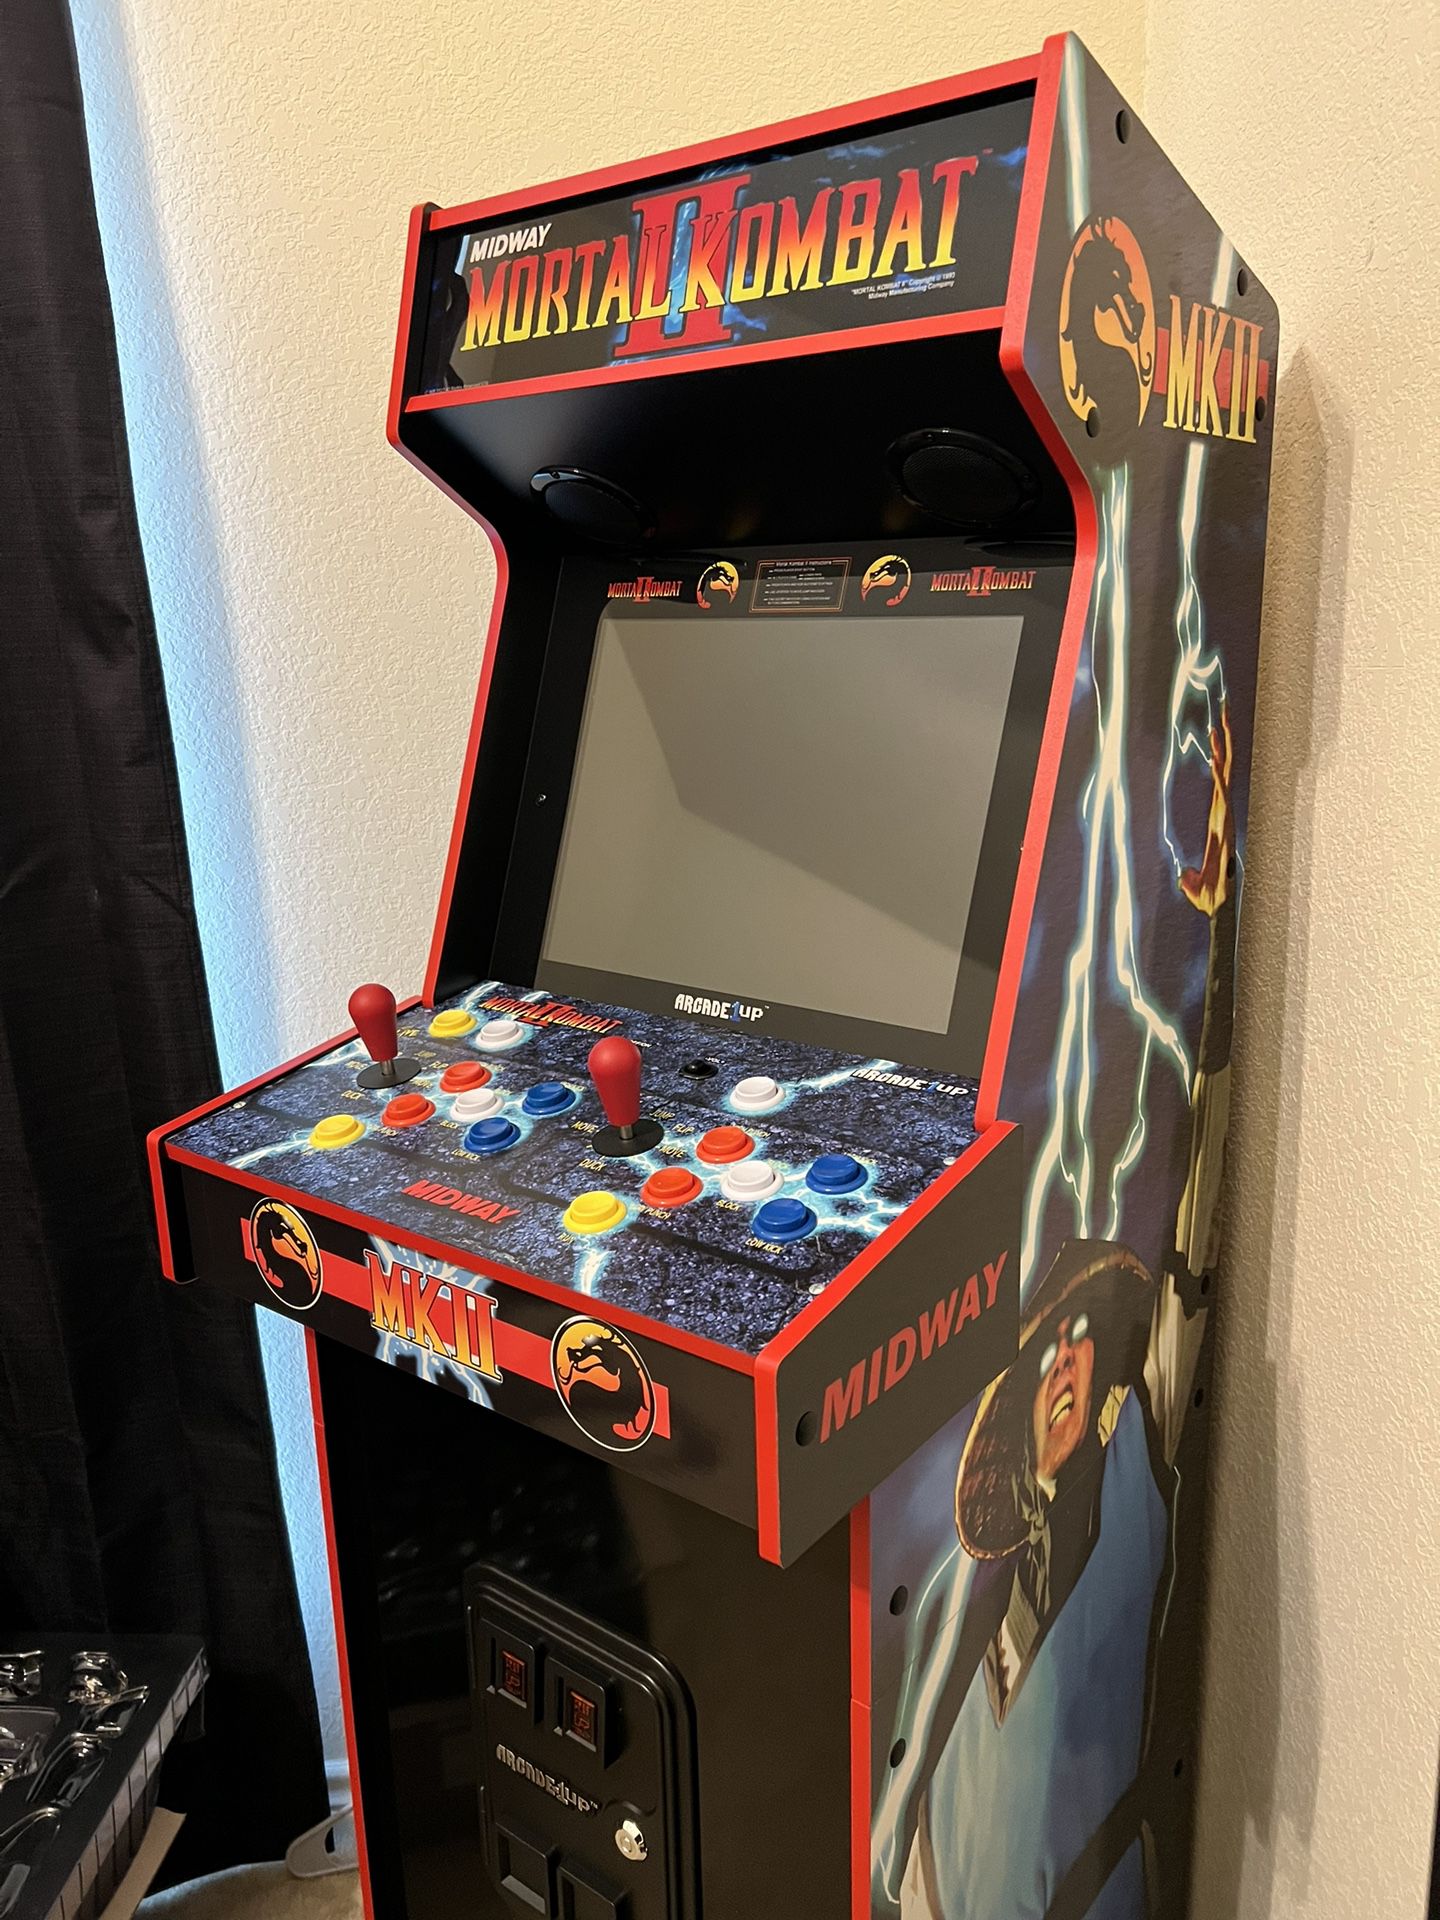 Midway Mortal Combat Arcade 1 Up